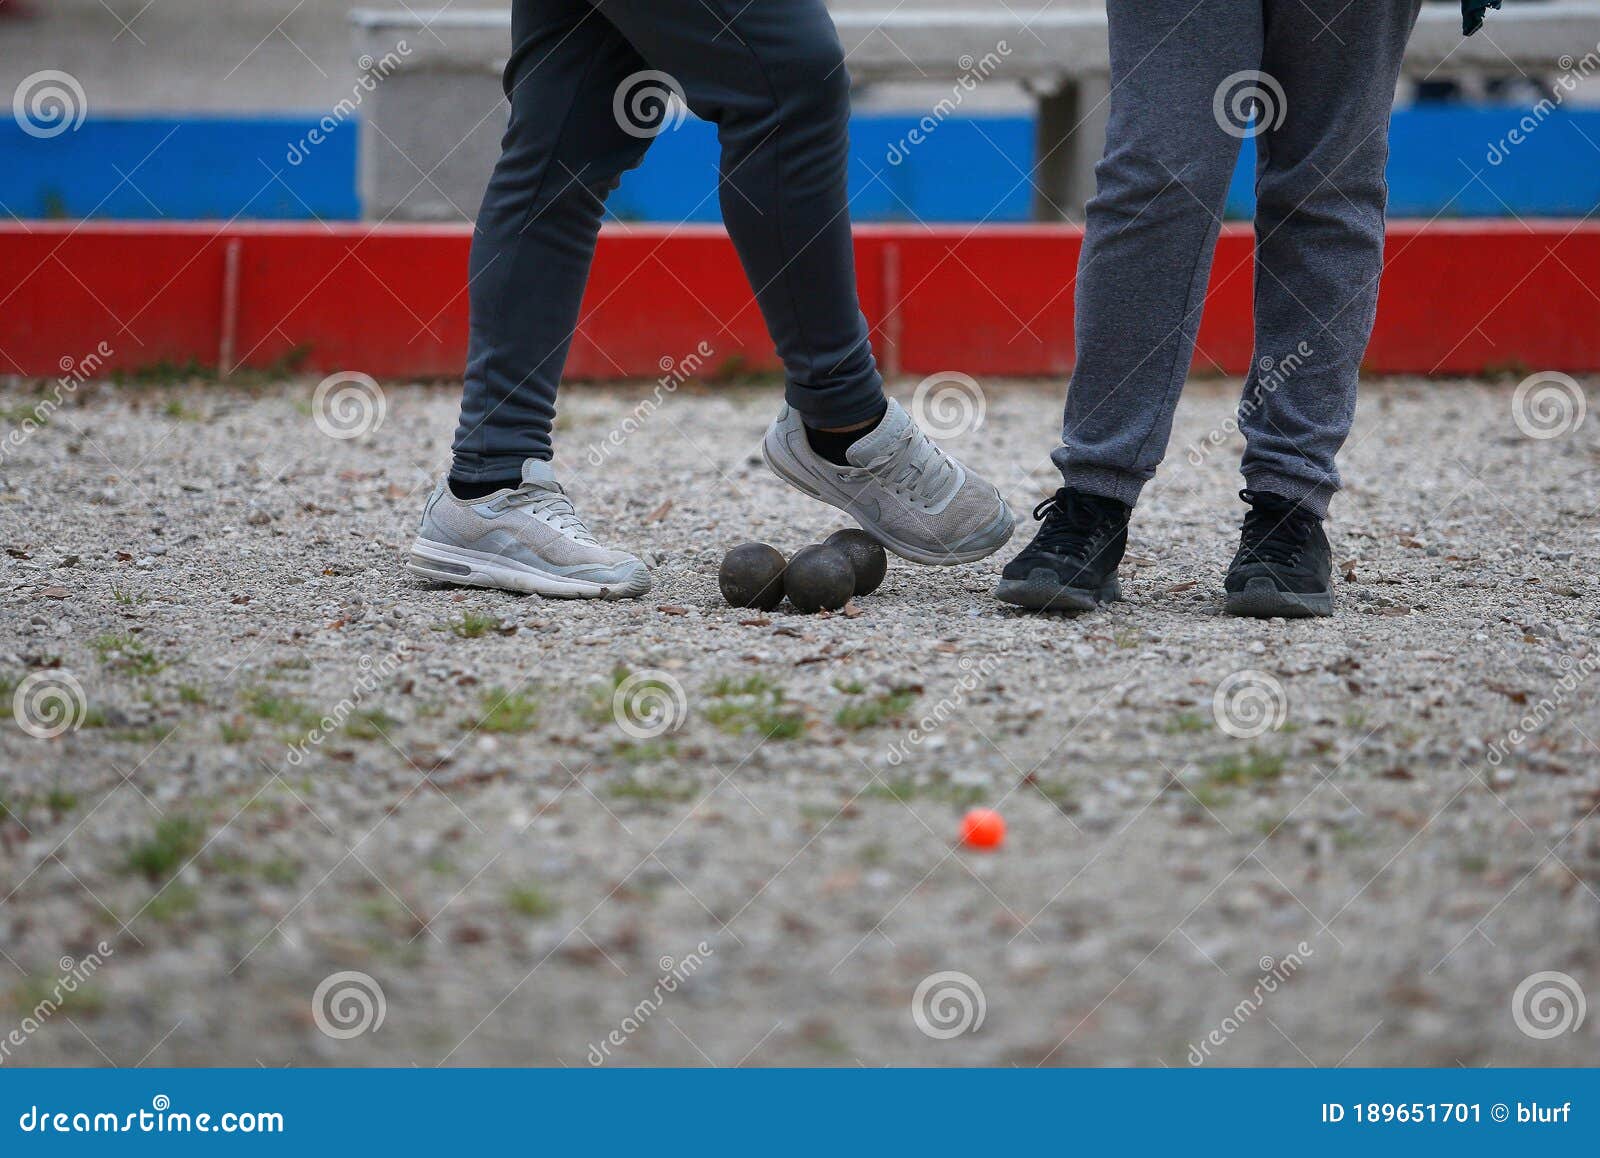 petanque throwers on playground